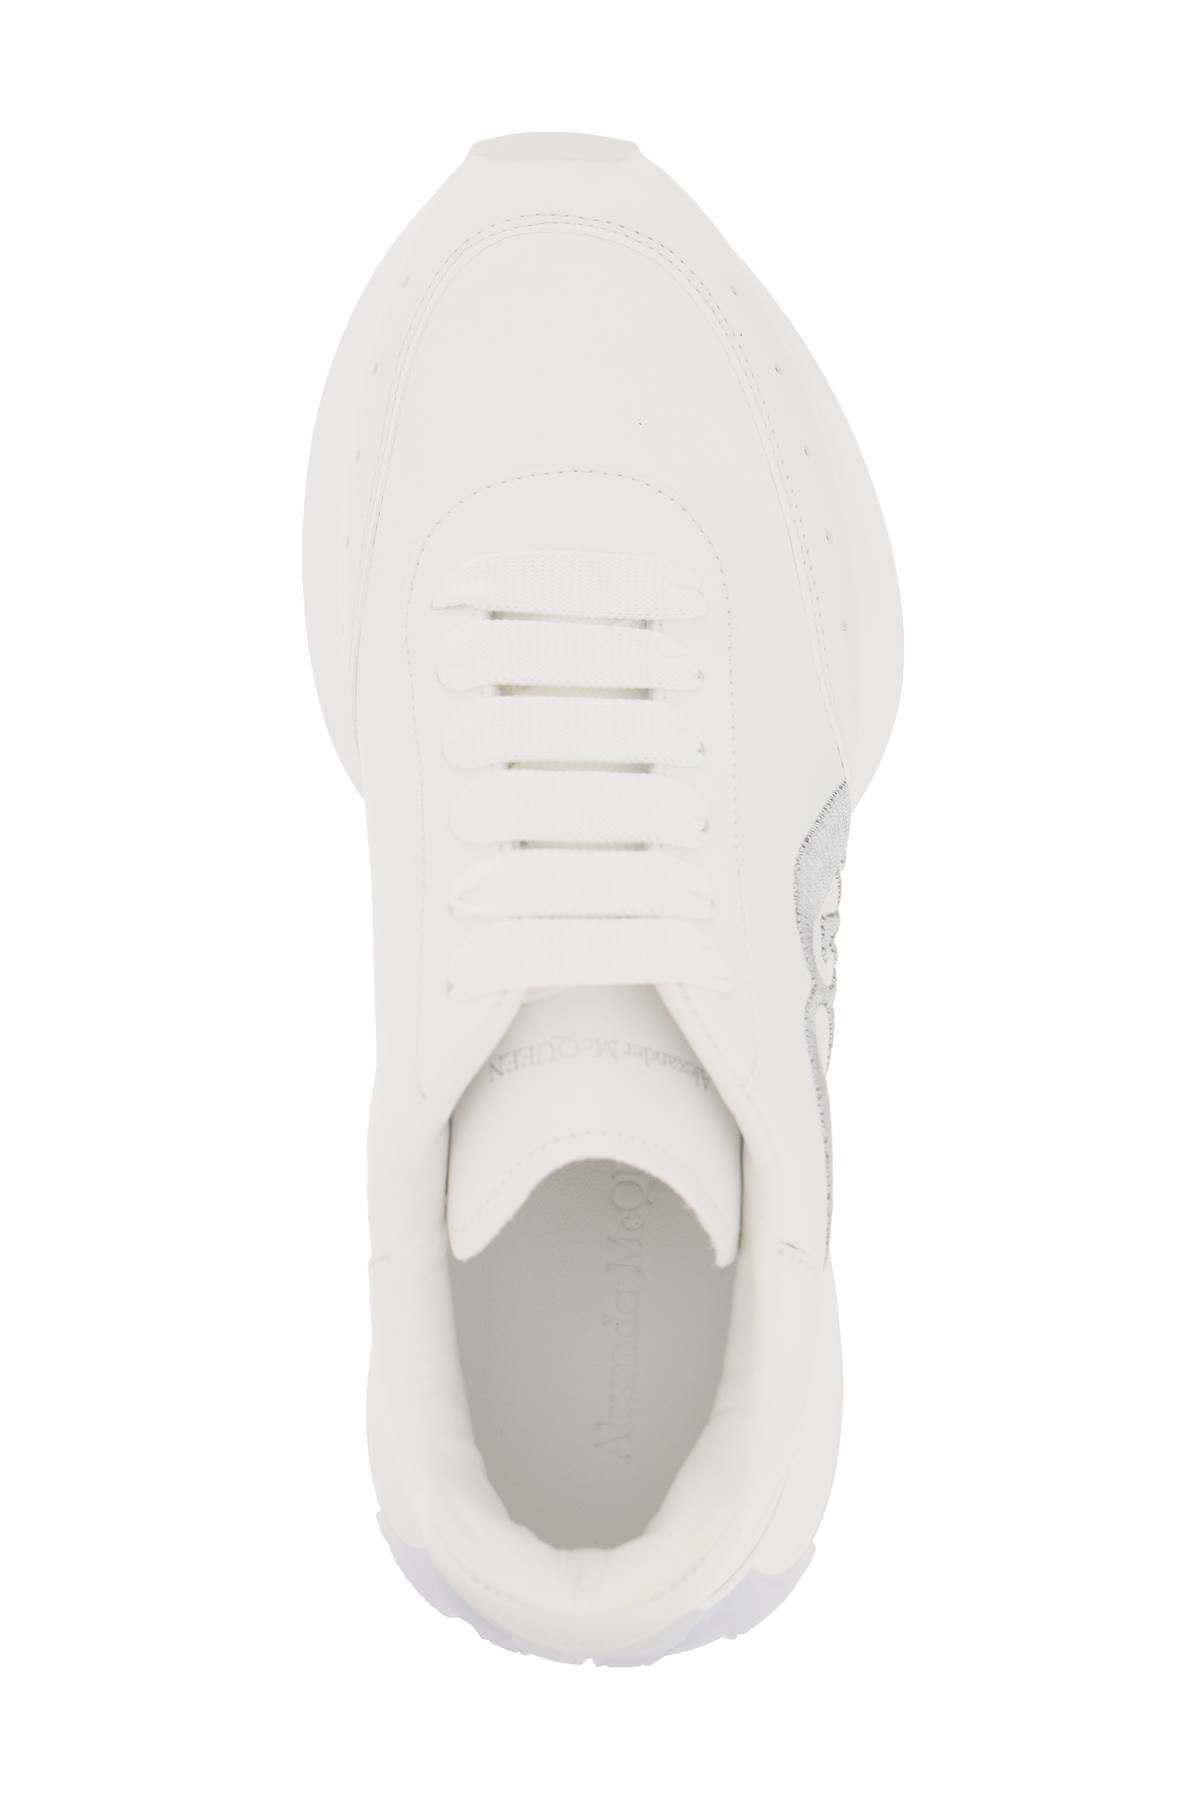 Shop Alexander Mcqueen Leather Sprint Runner Sneakers In White,grey